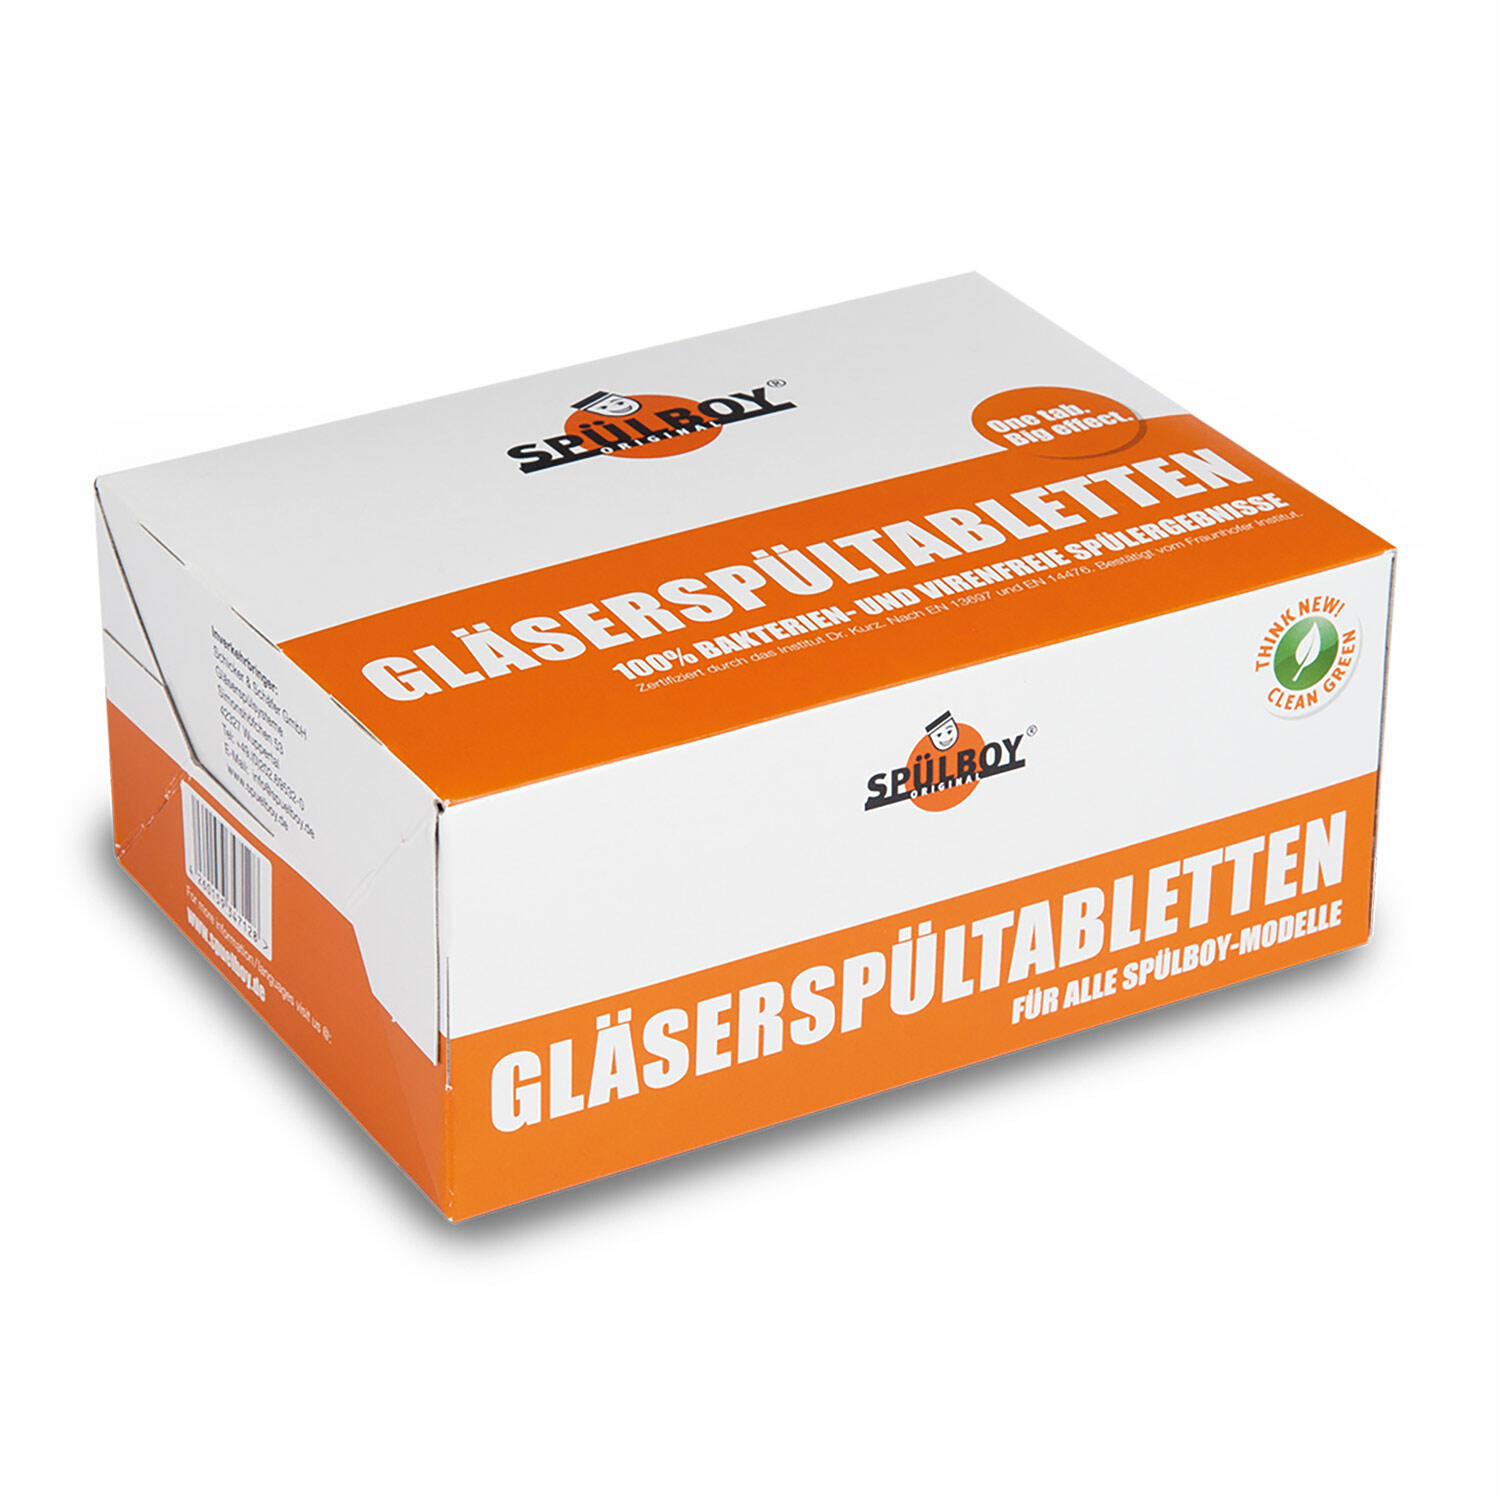 Gläserspültabletten für Spülboy NU Classic 750 g 